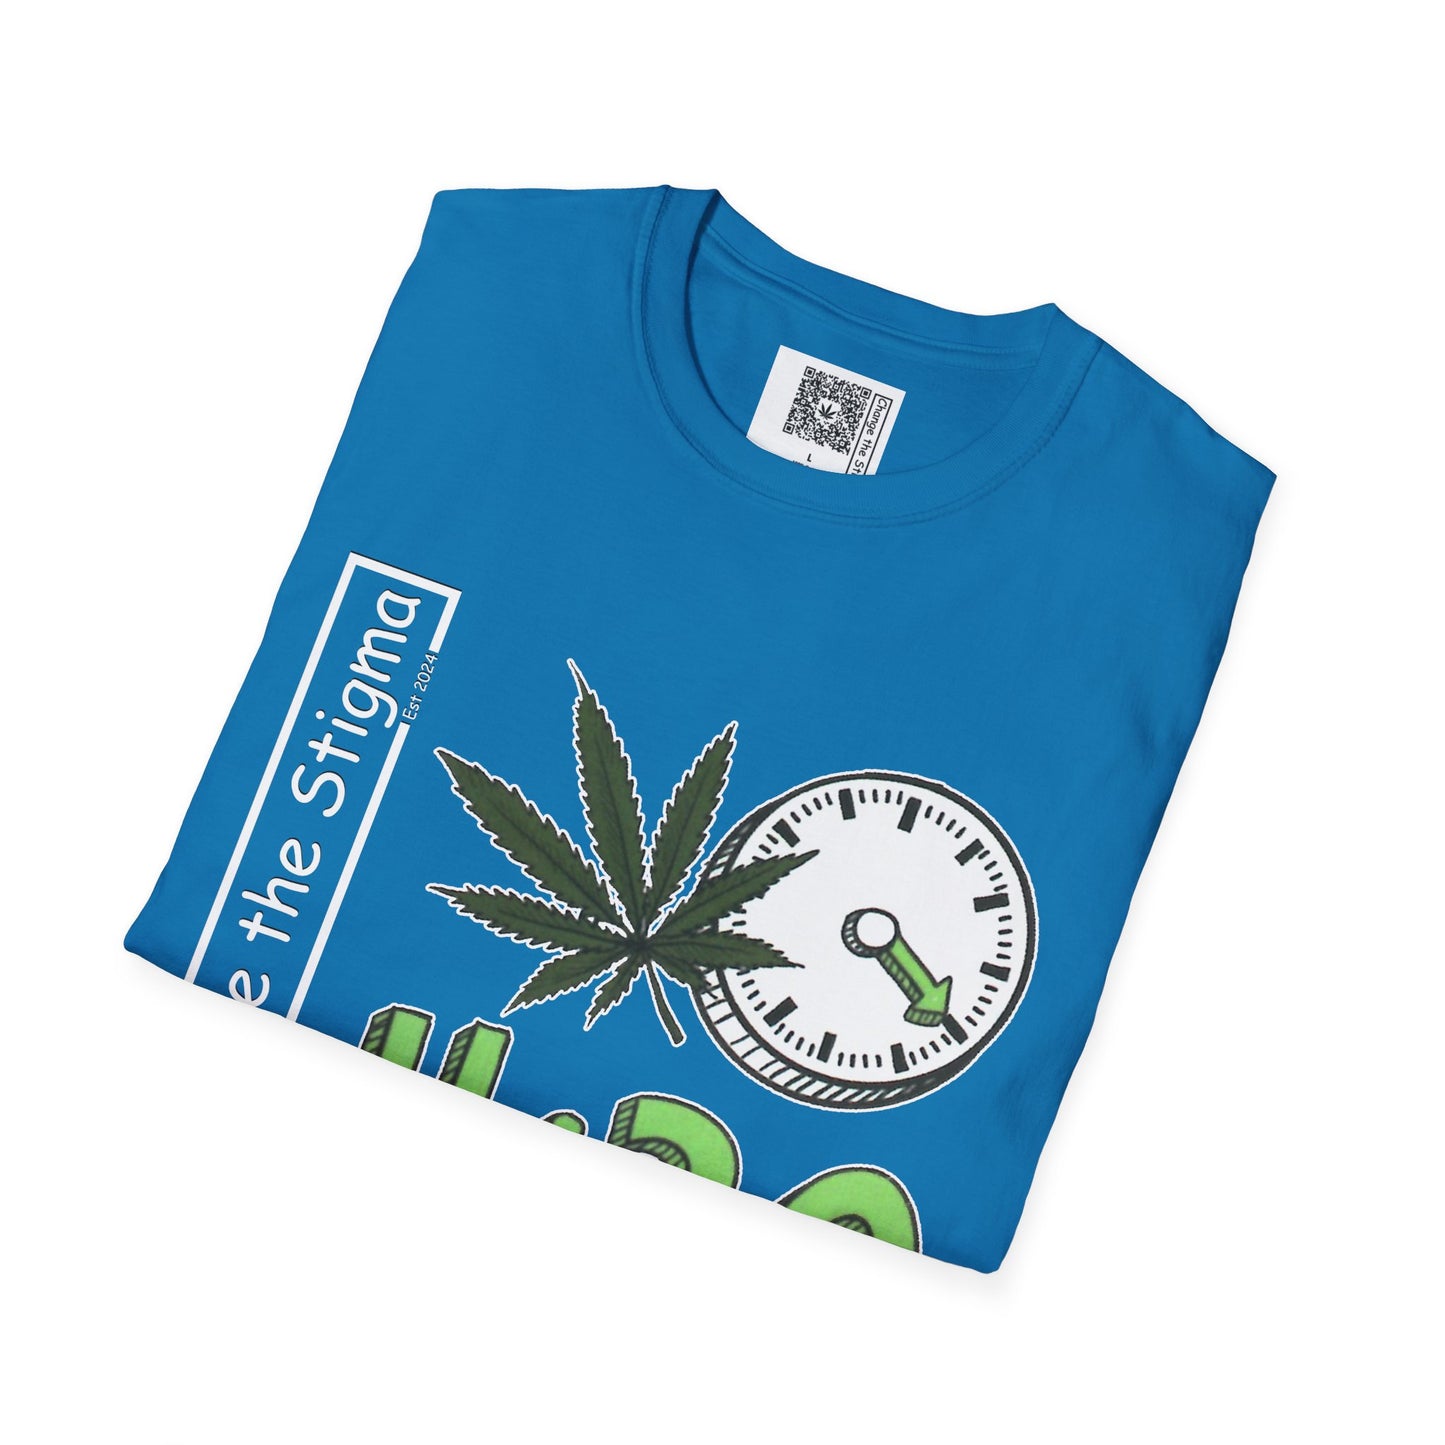 Change the Stigma 420 CLOCK Weed Shirt